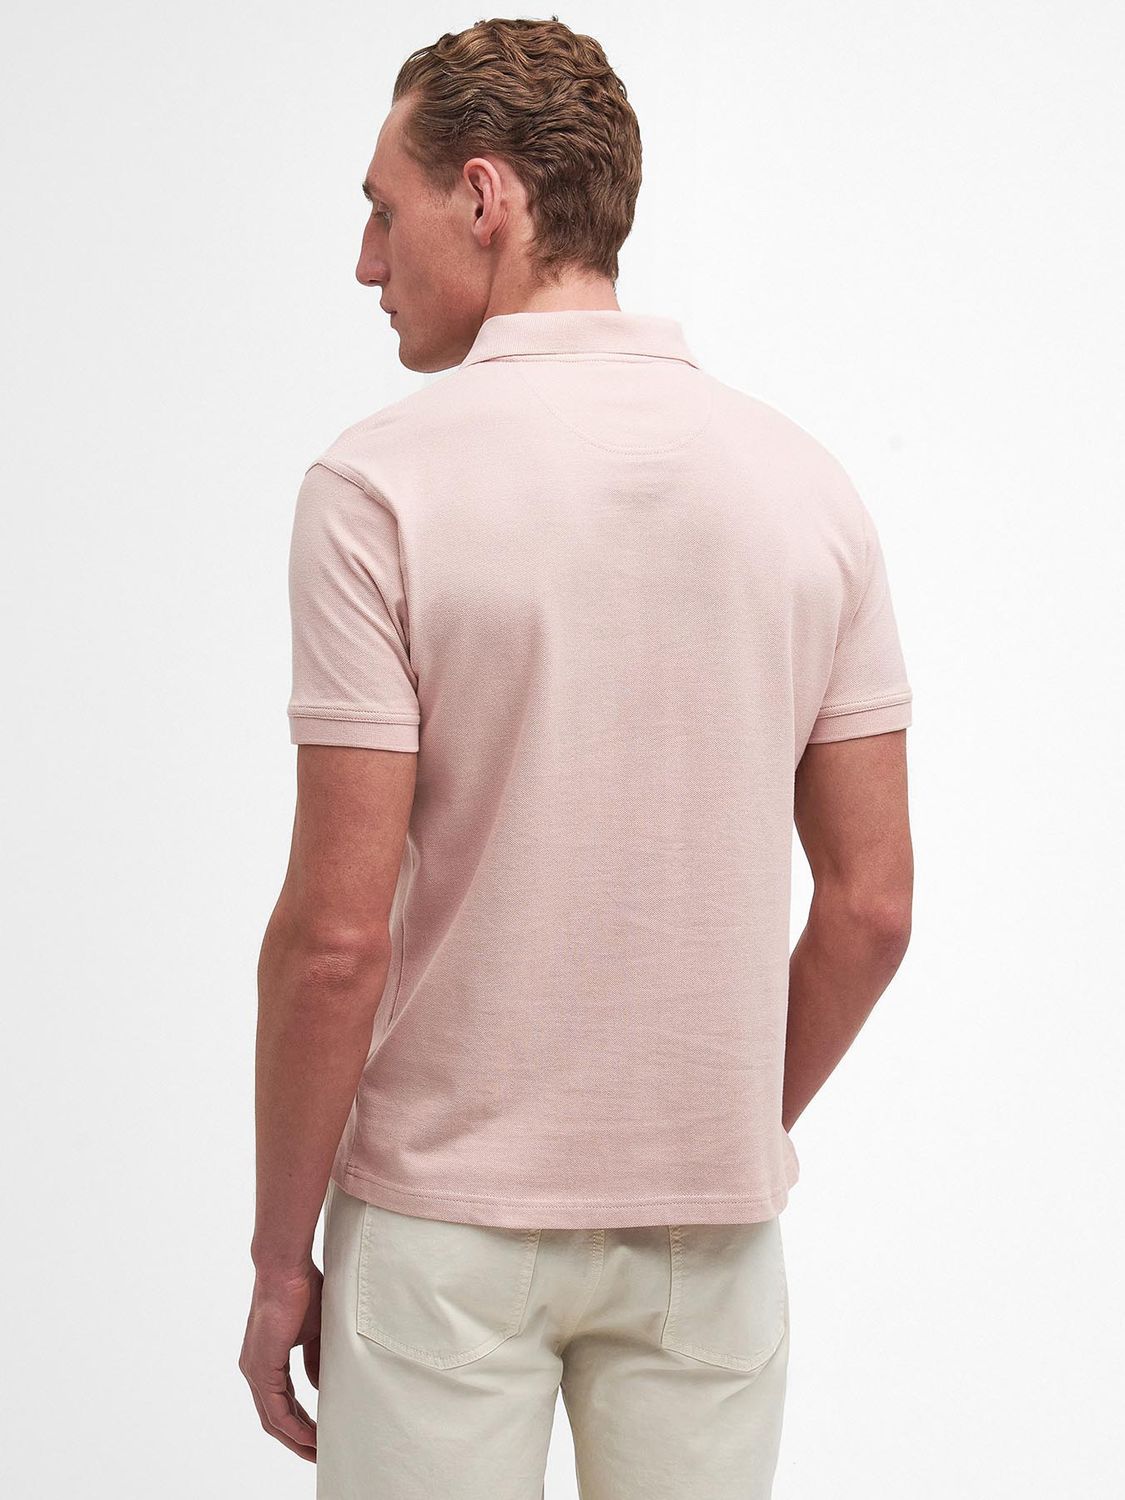 Barbour Sports Pique Polo Shirt, Pink Quartz, S